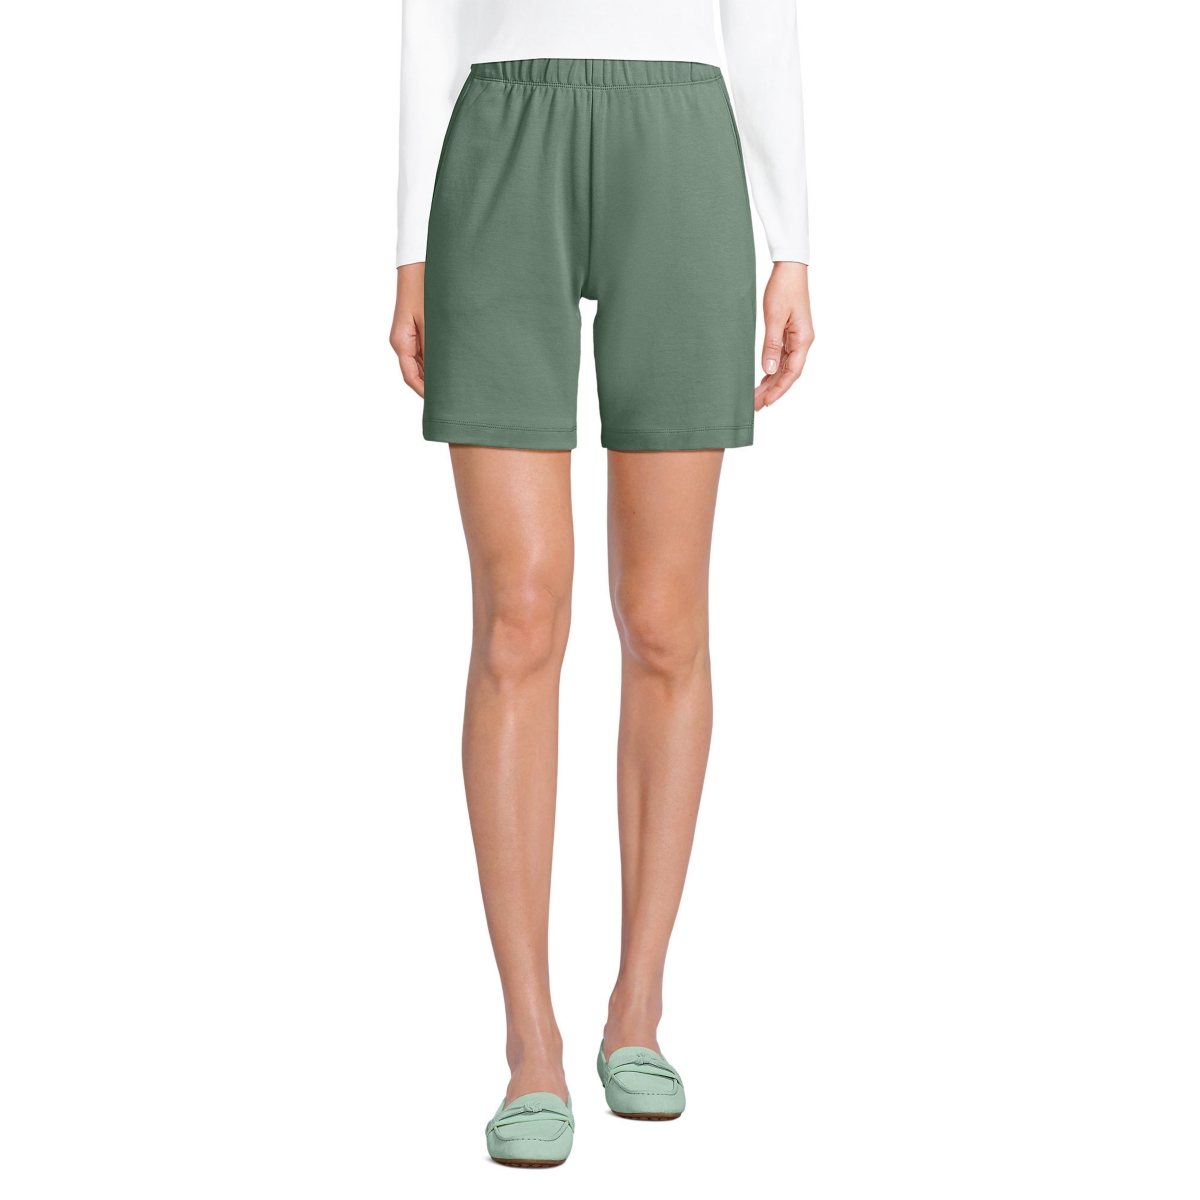 Petite Sport Knit High Rise Elastic Waist Shorts - Lily pad green